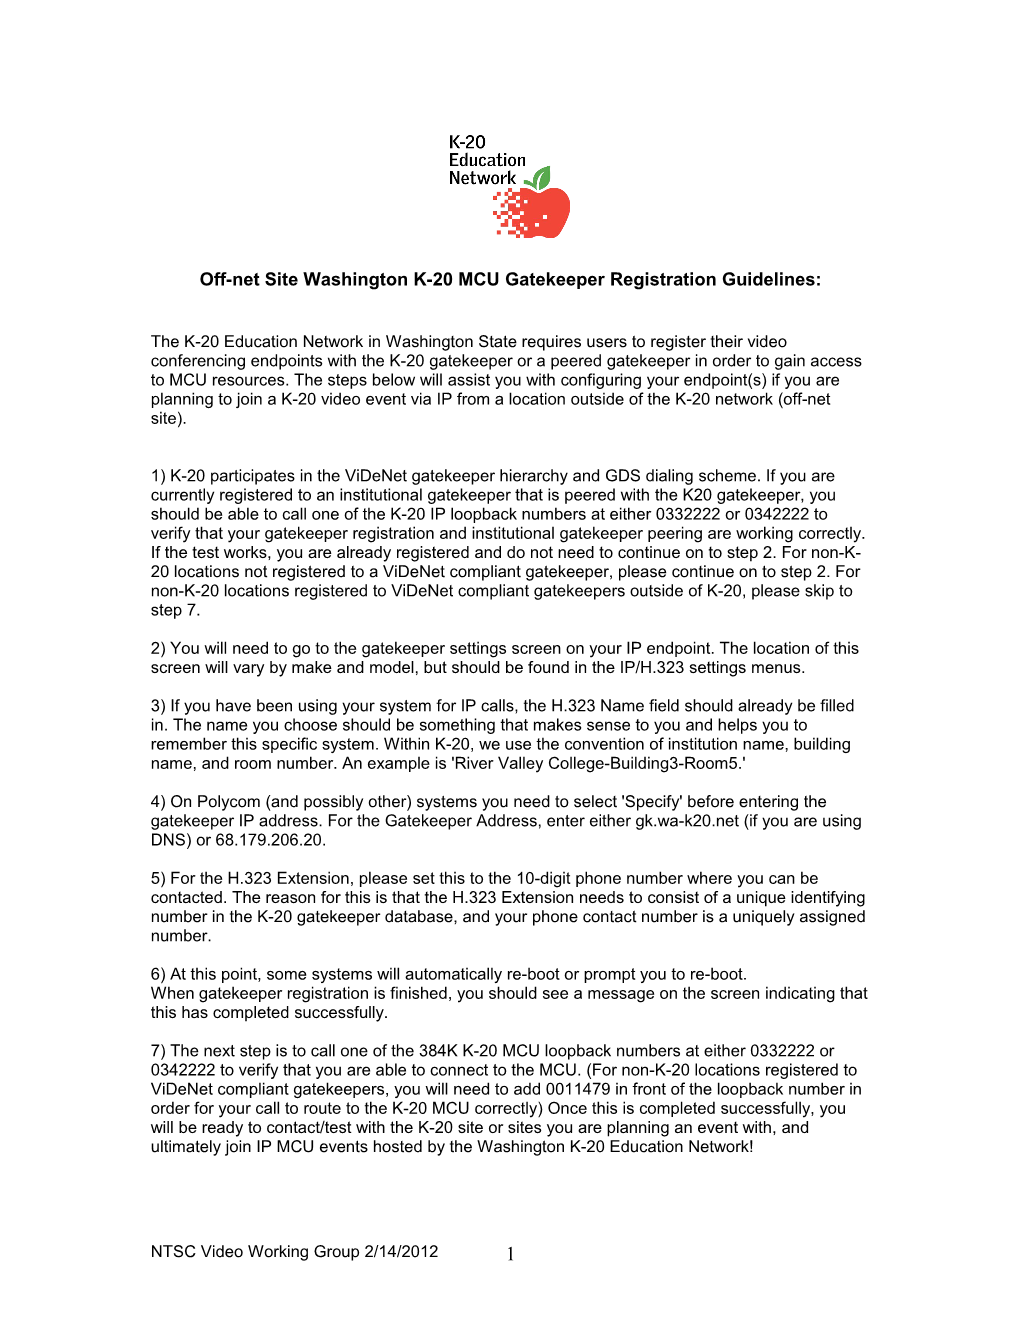 Off-Net Site Washington K-20 MCU Gatekeeper Registration Steps